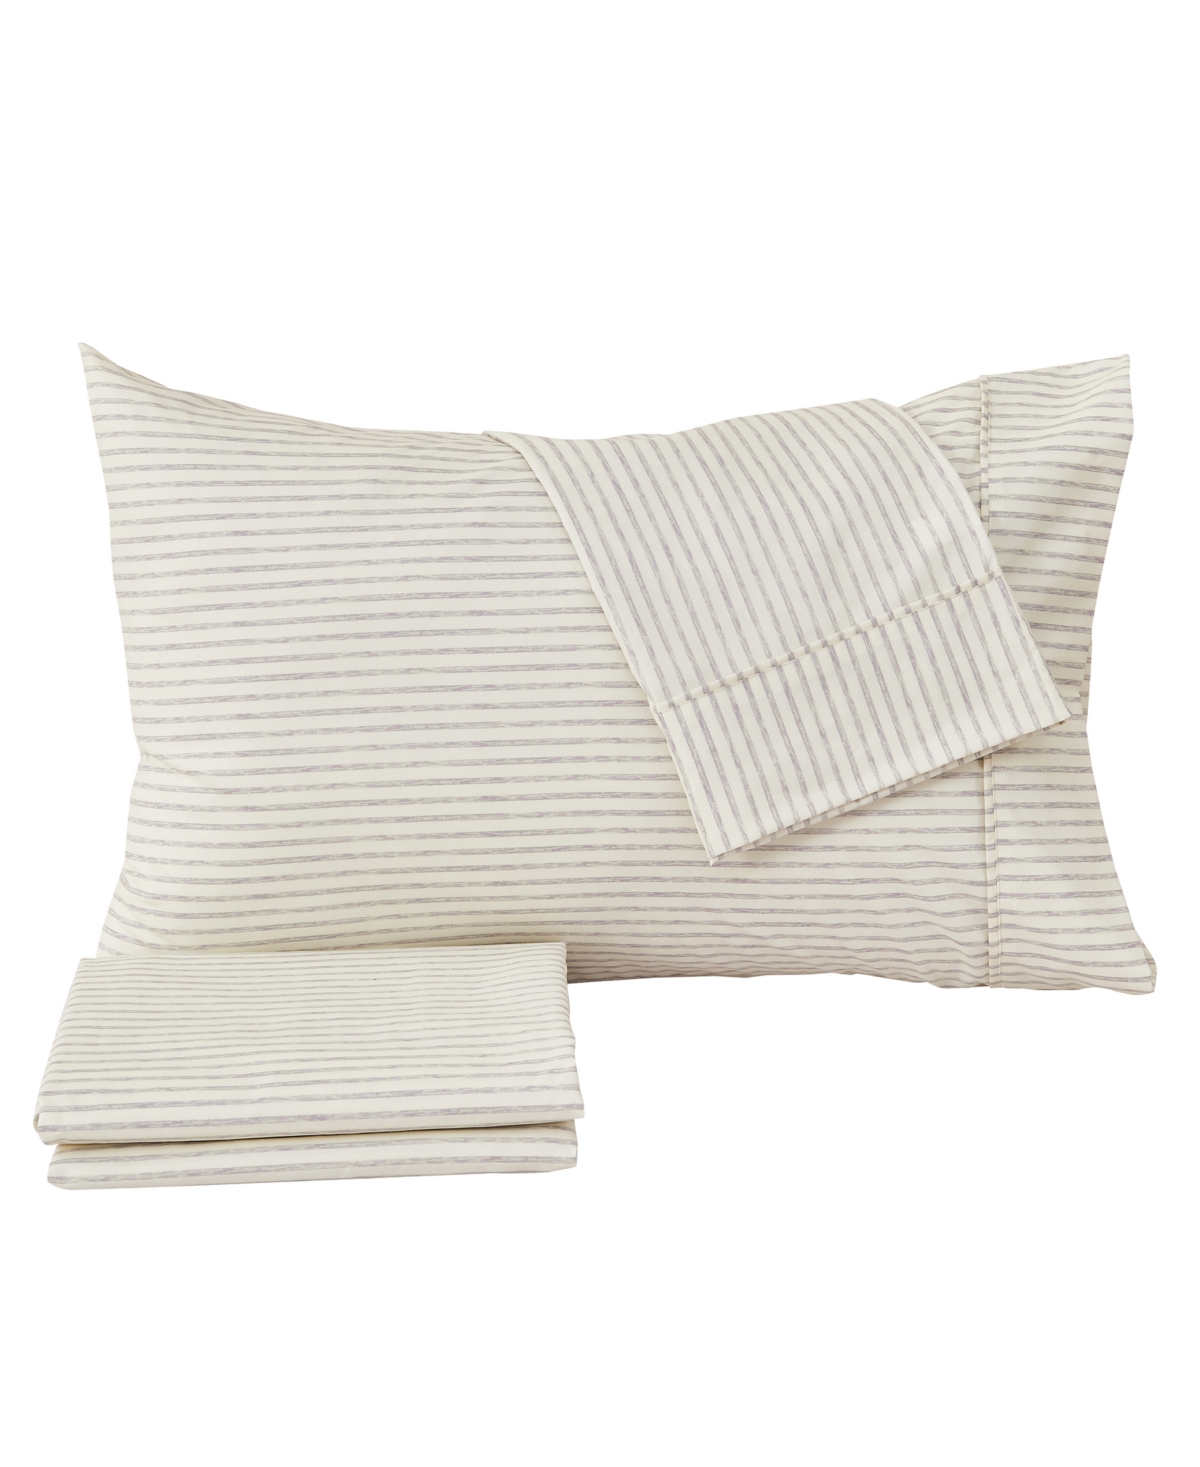 Premium Comforts Striped Microfiber Crease Resistant 3 Piece Sheet Set, Twin In Stripe - Light Gray